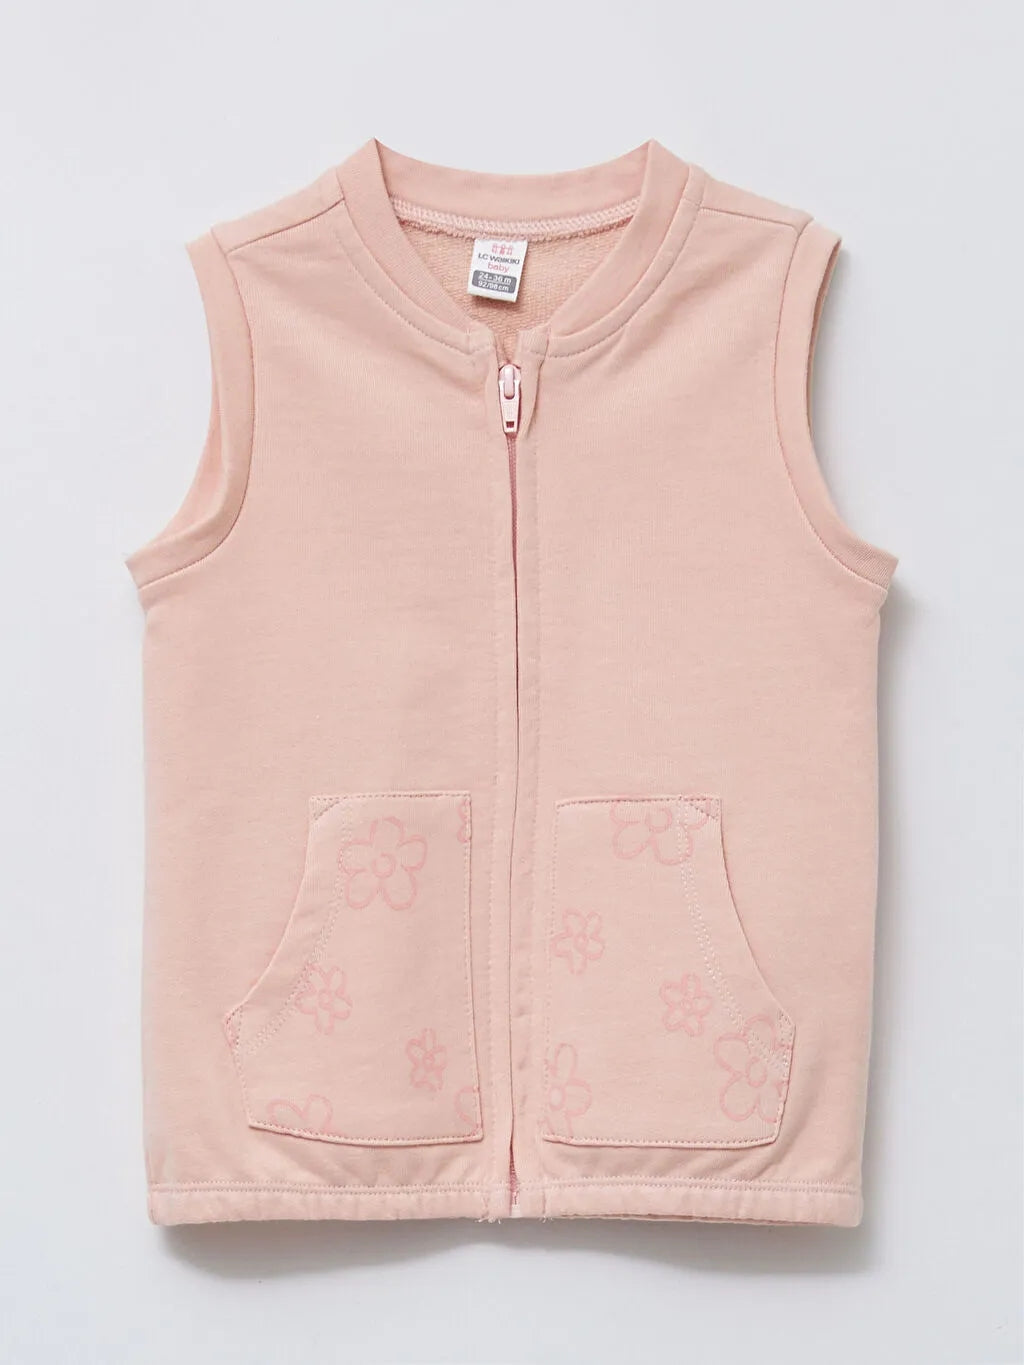 Crew Neck Printed Cotton Baby Girl Zipper Vest